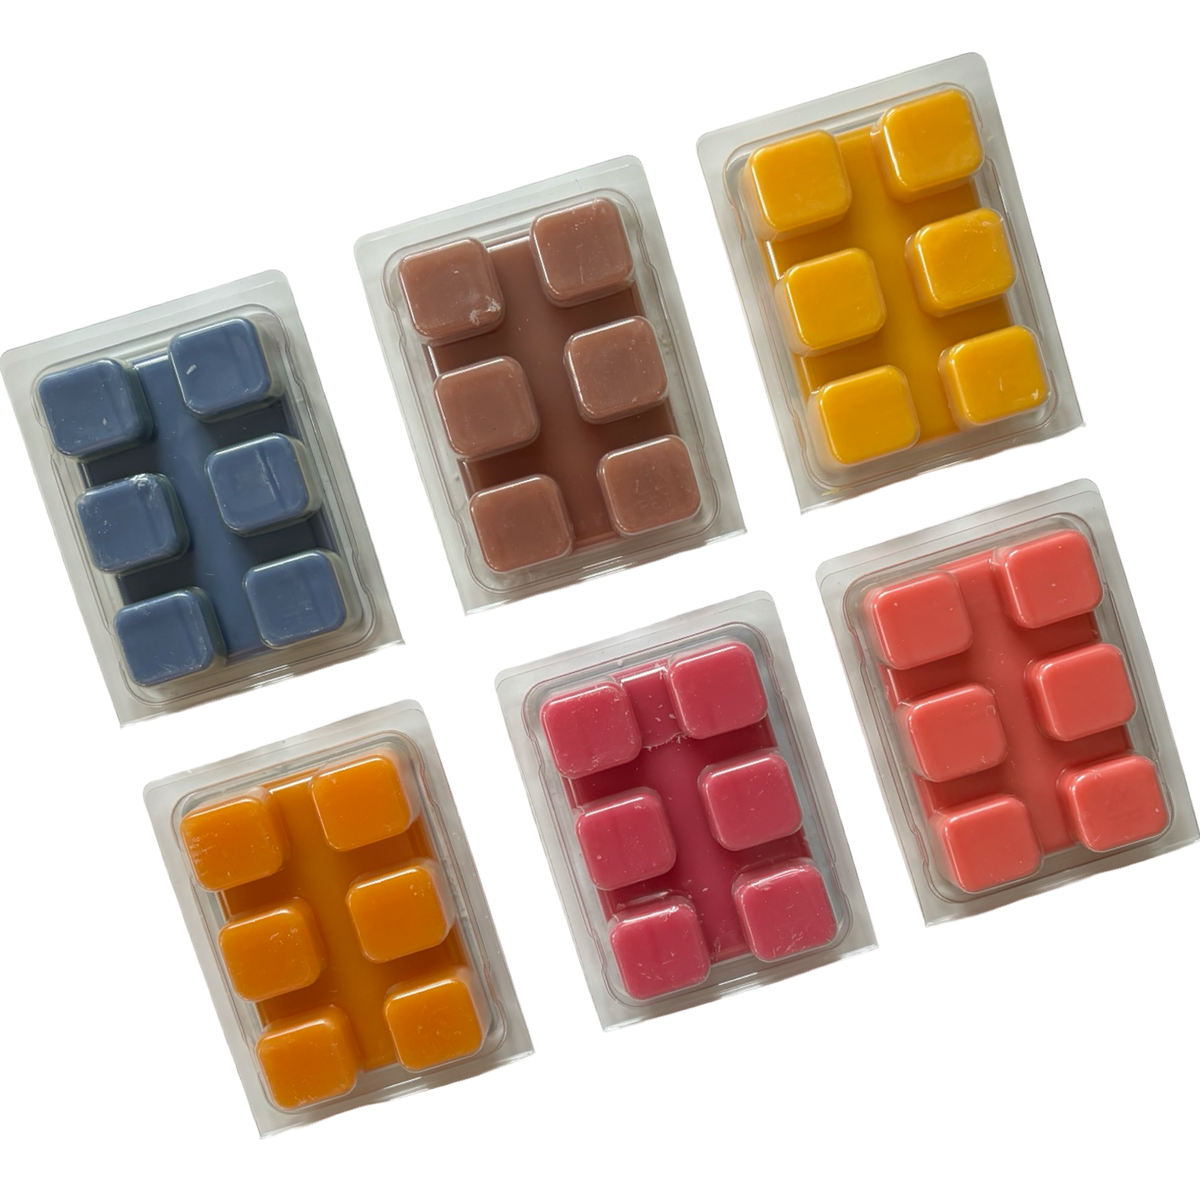 6pk Variety Pack Wax Melt Warmer Cubes 6 x 1.25oz - By Mainstays